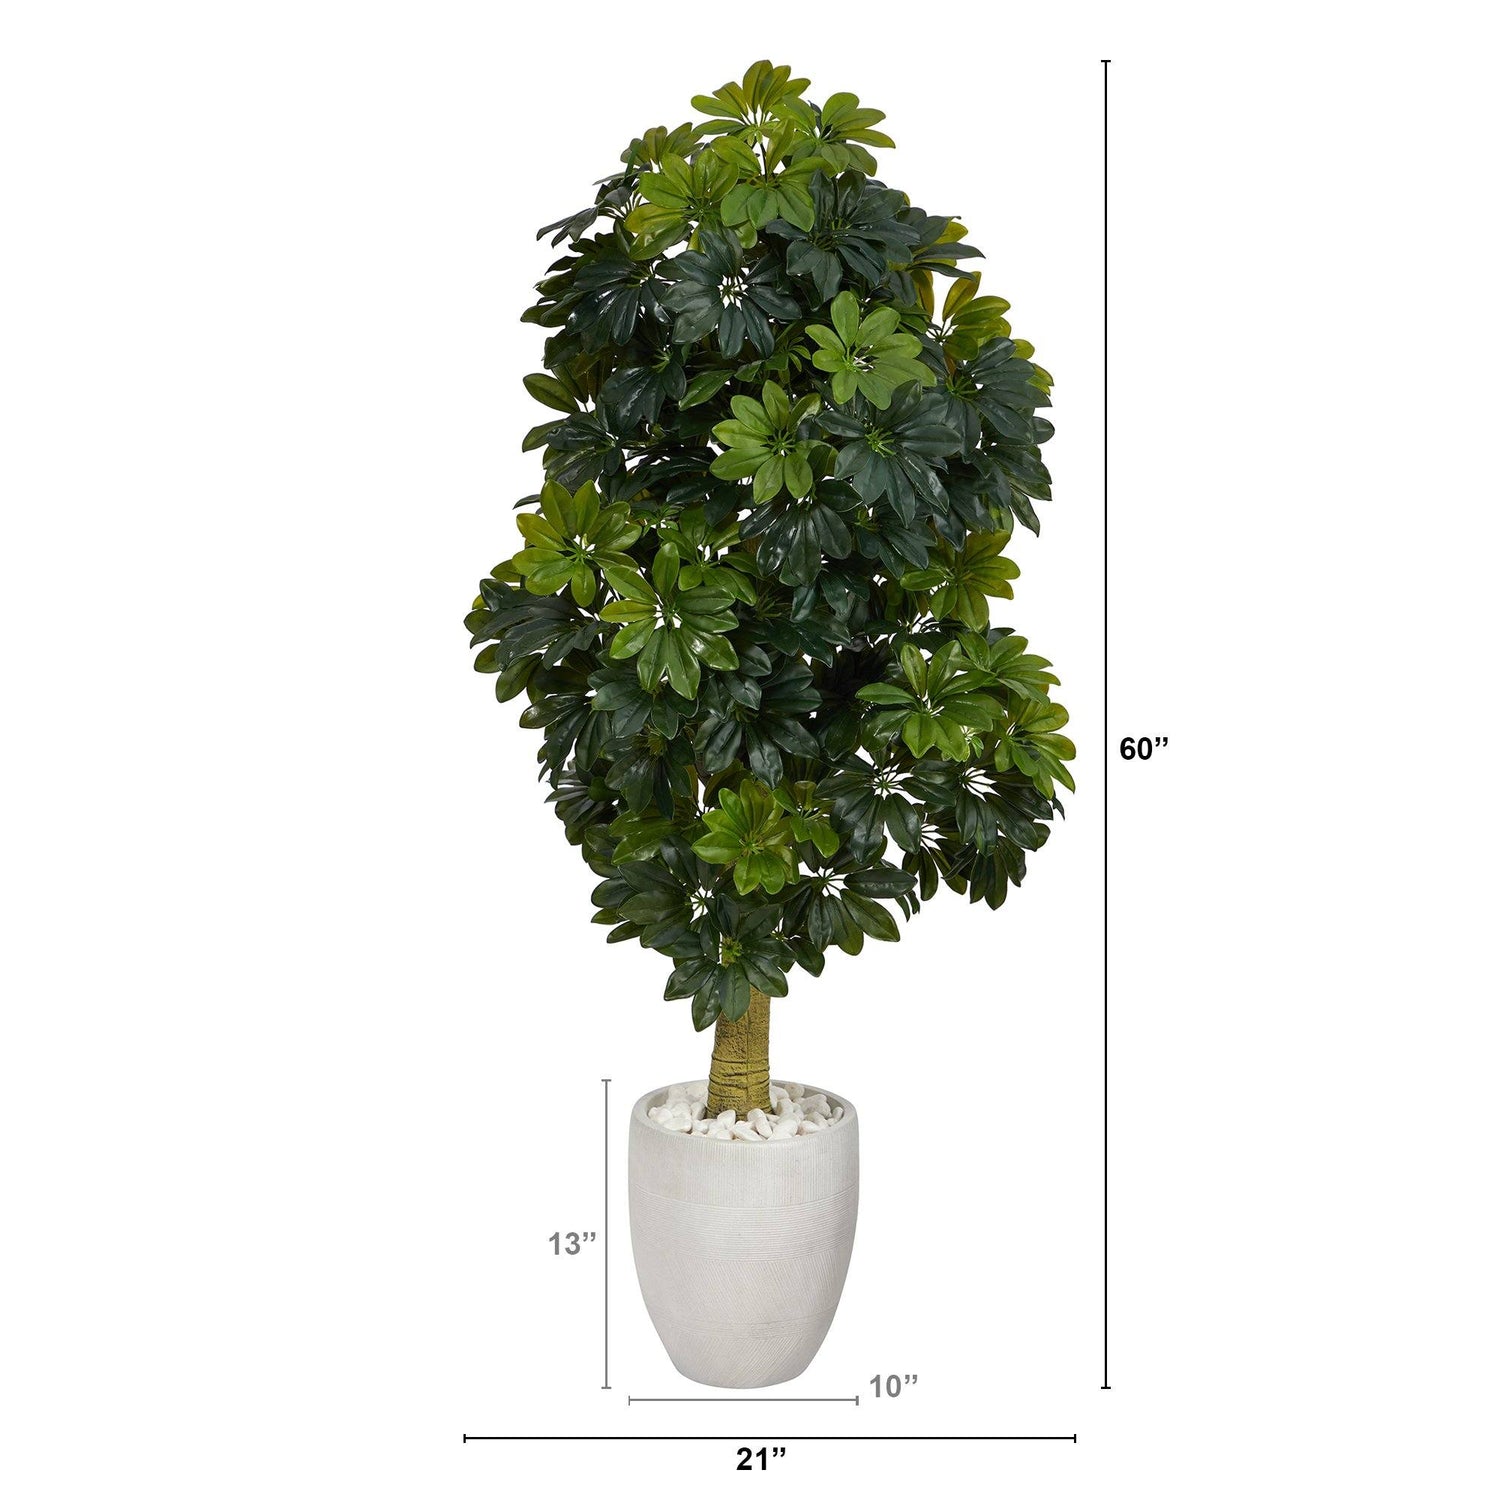 5' Schefflera Artificial Tree in White Planter (Real Touch)